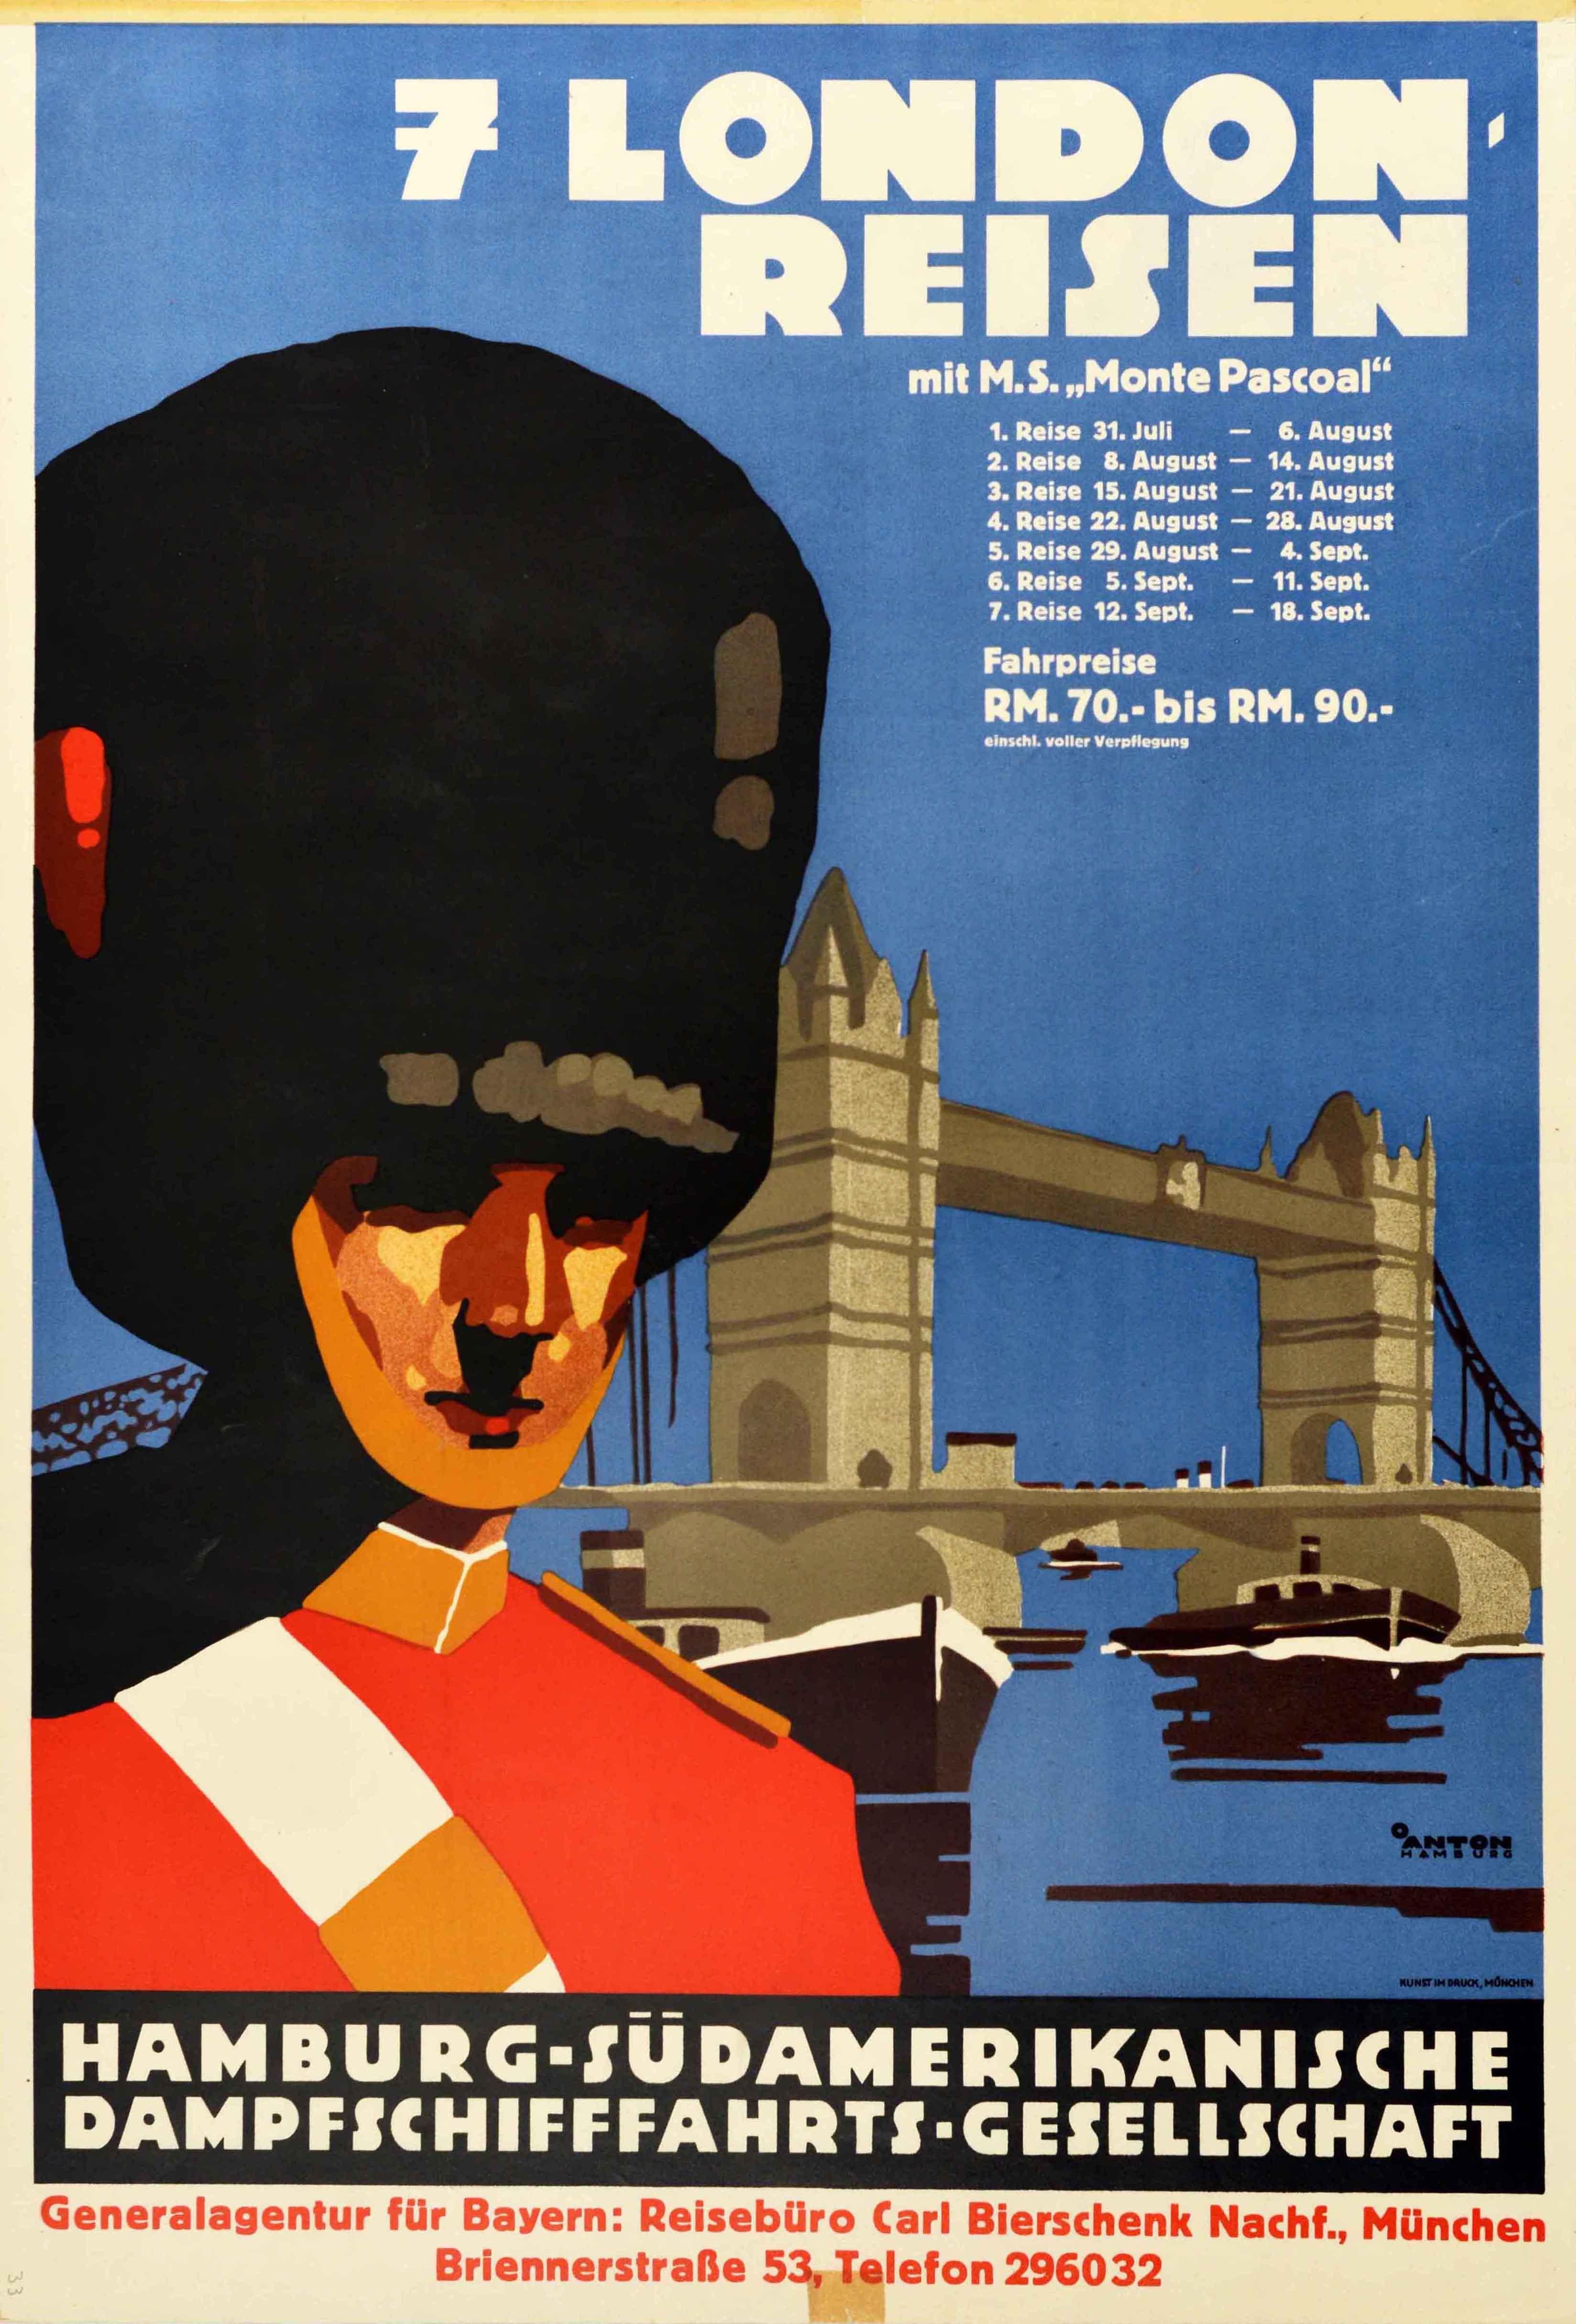 Ottomar Anton Print - Original Vintage Cruise Travel Poster London Ft. Royal Guard Tower Bridge Thames